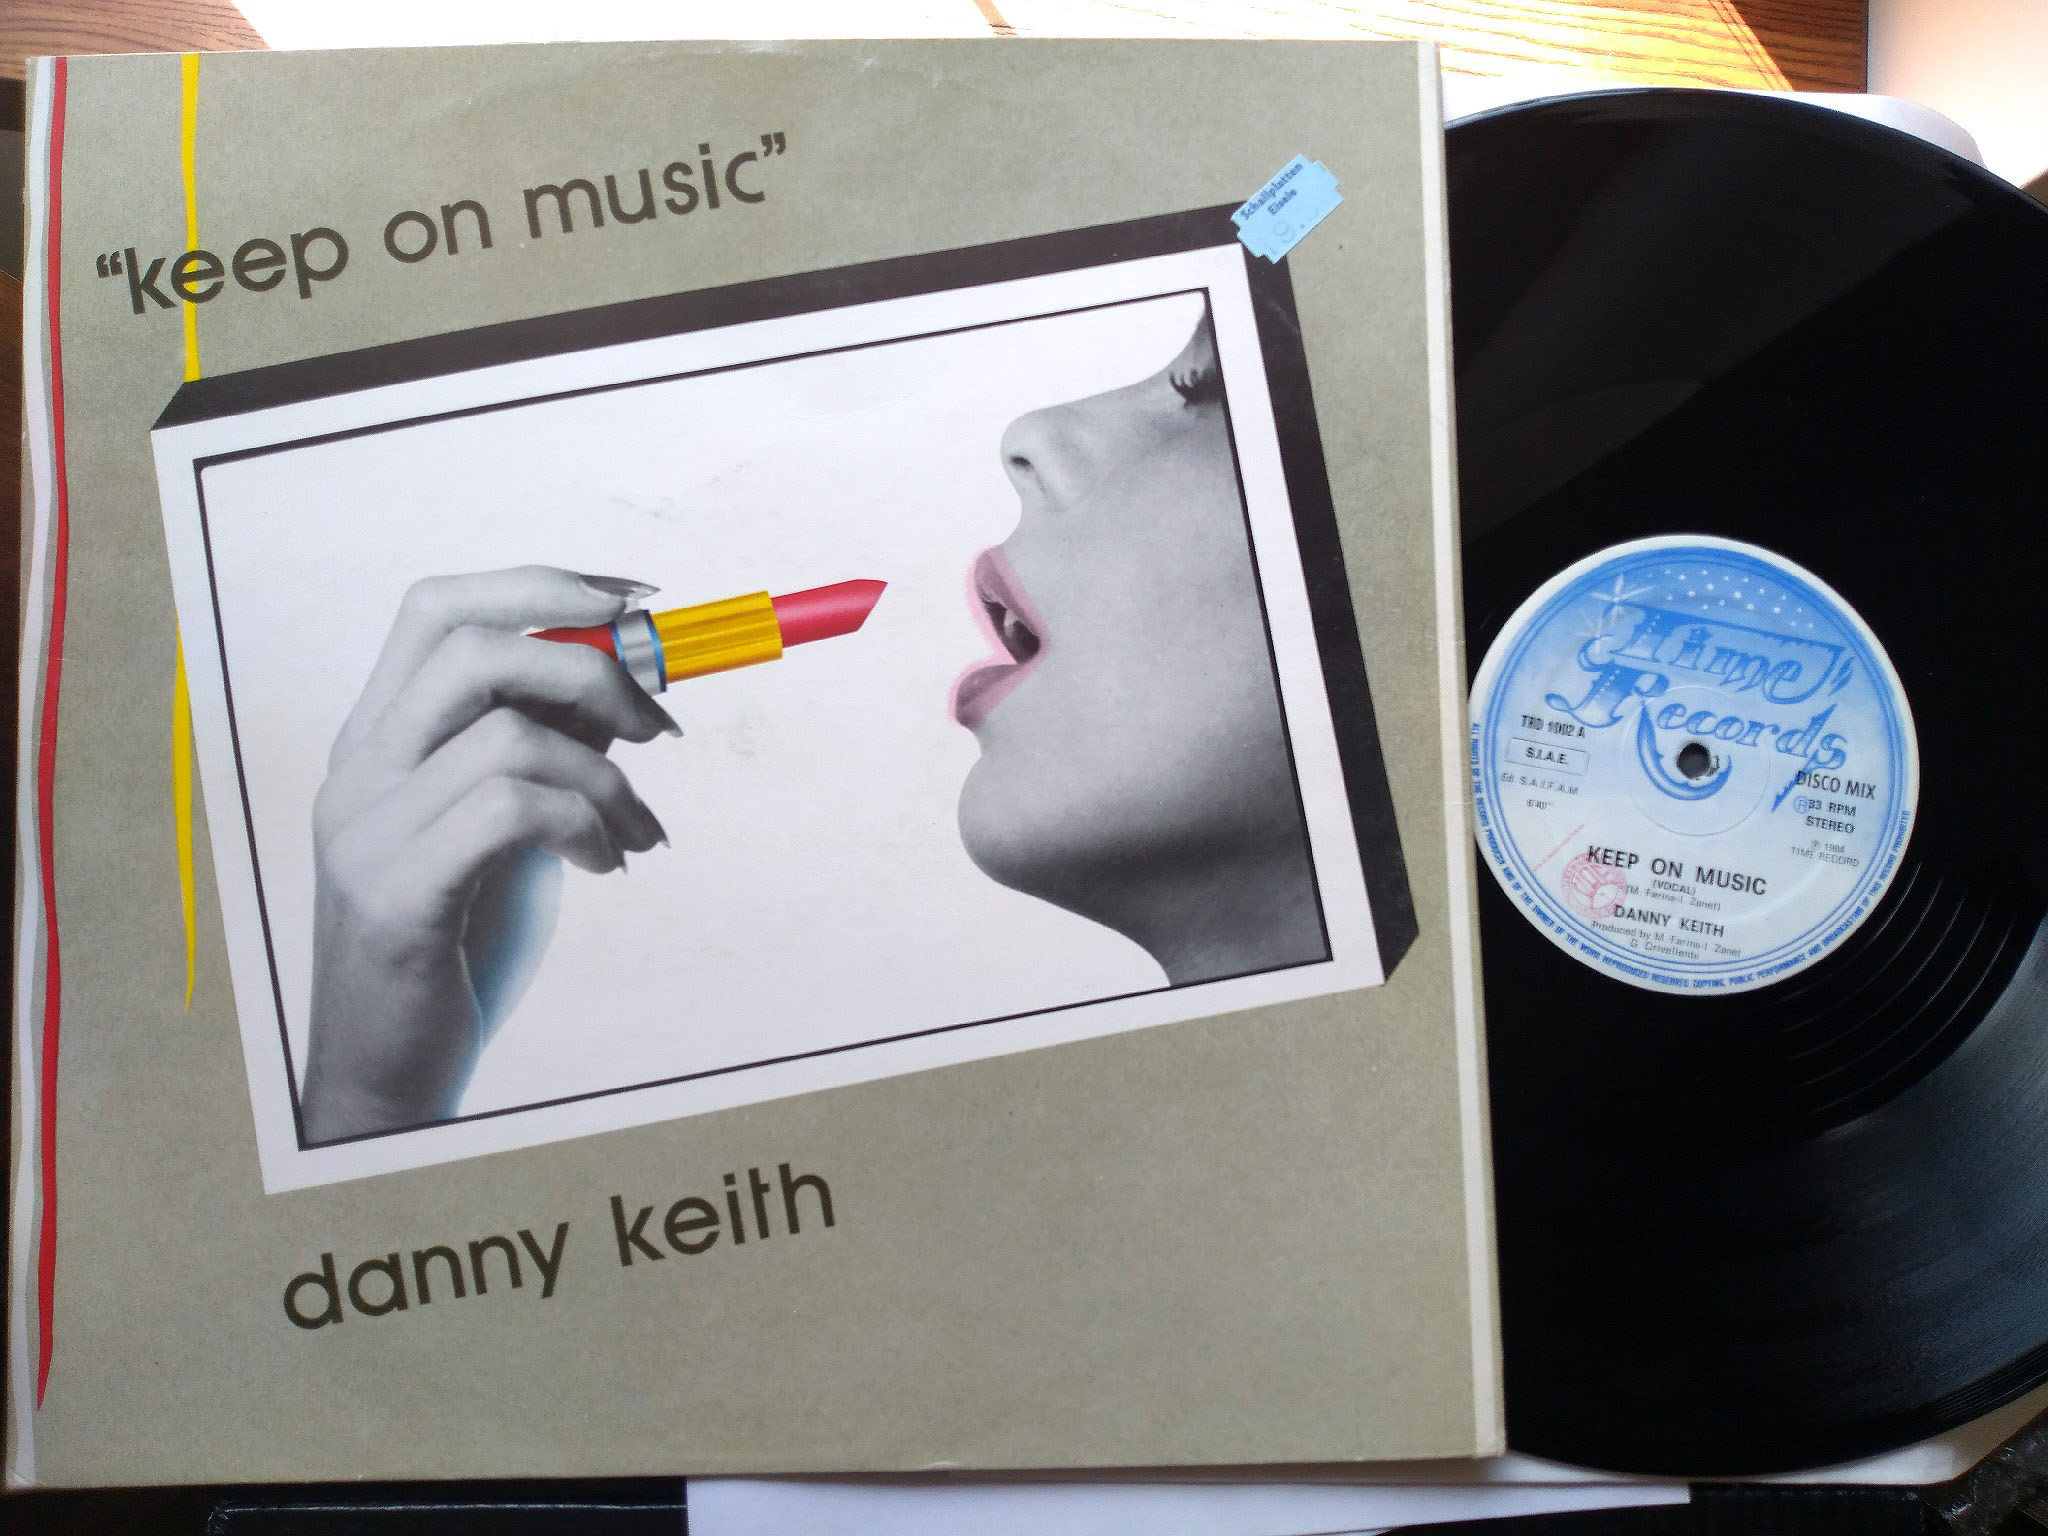 Danny Keith - Keep on music